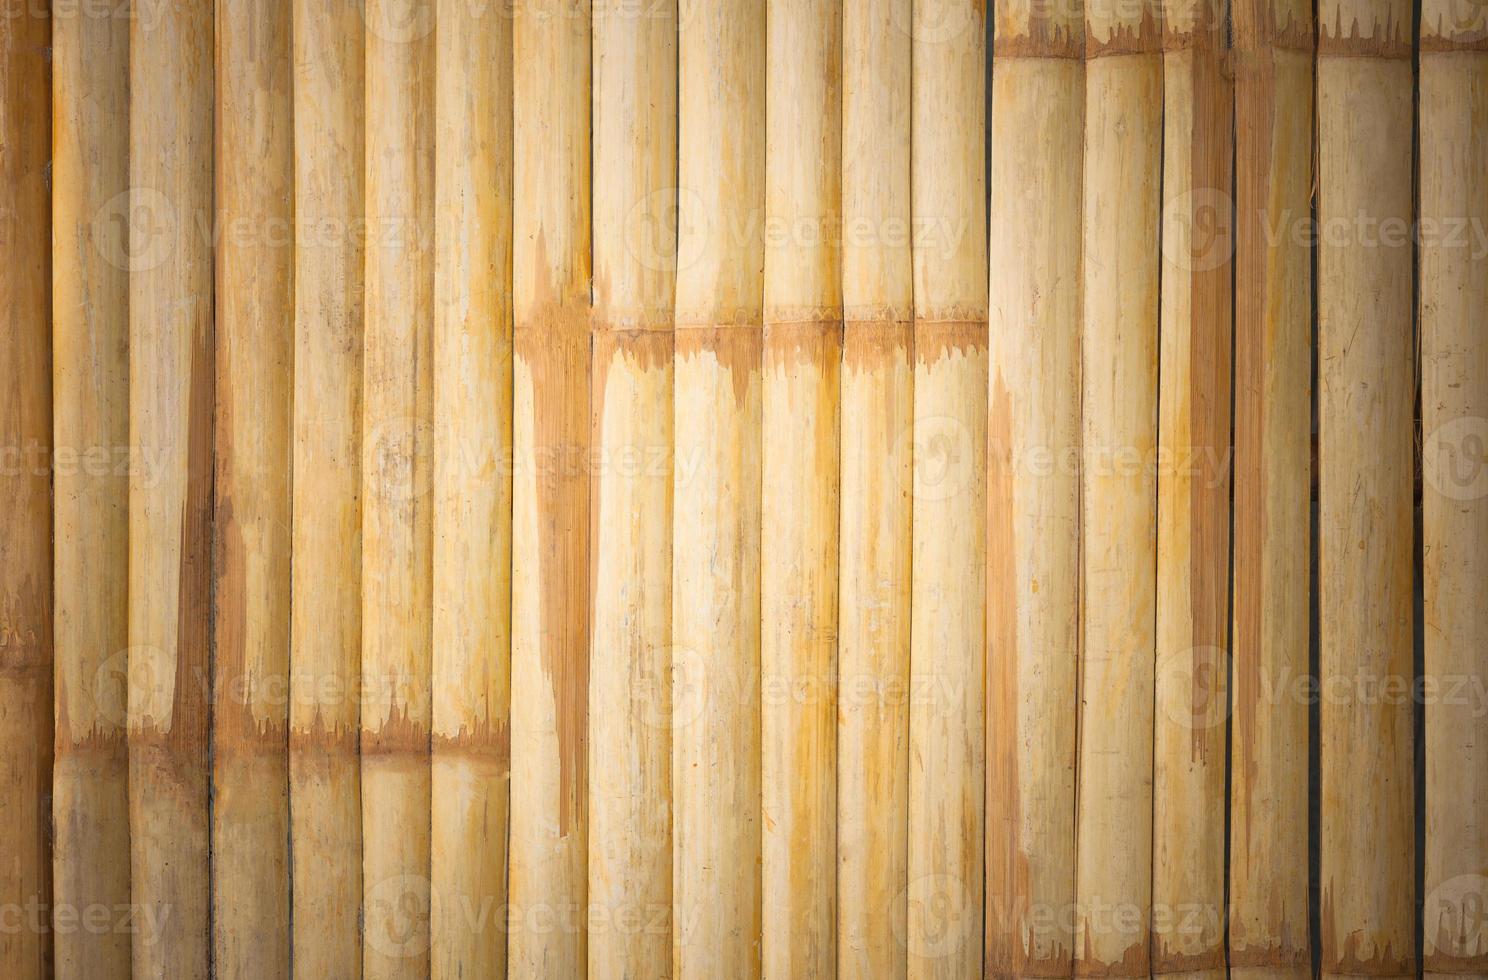 grunge yellow bamboo background and texture photo